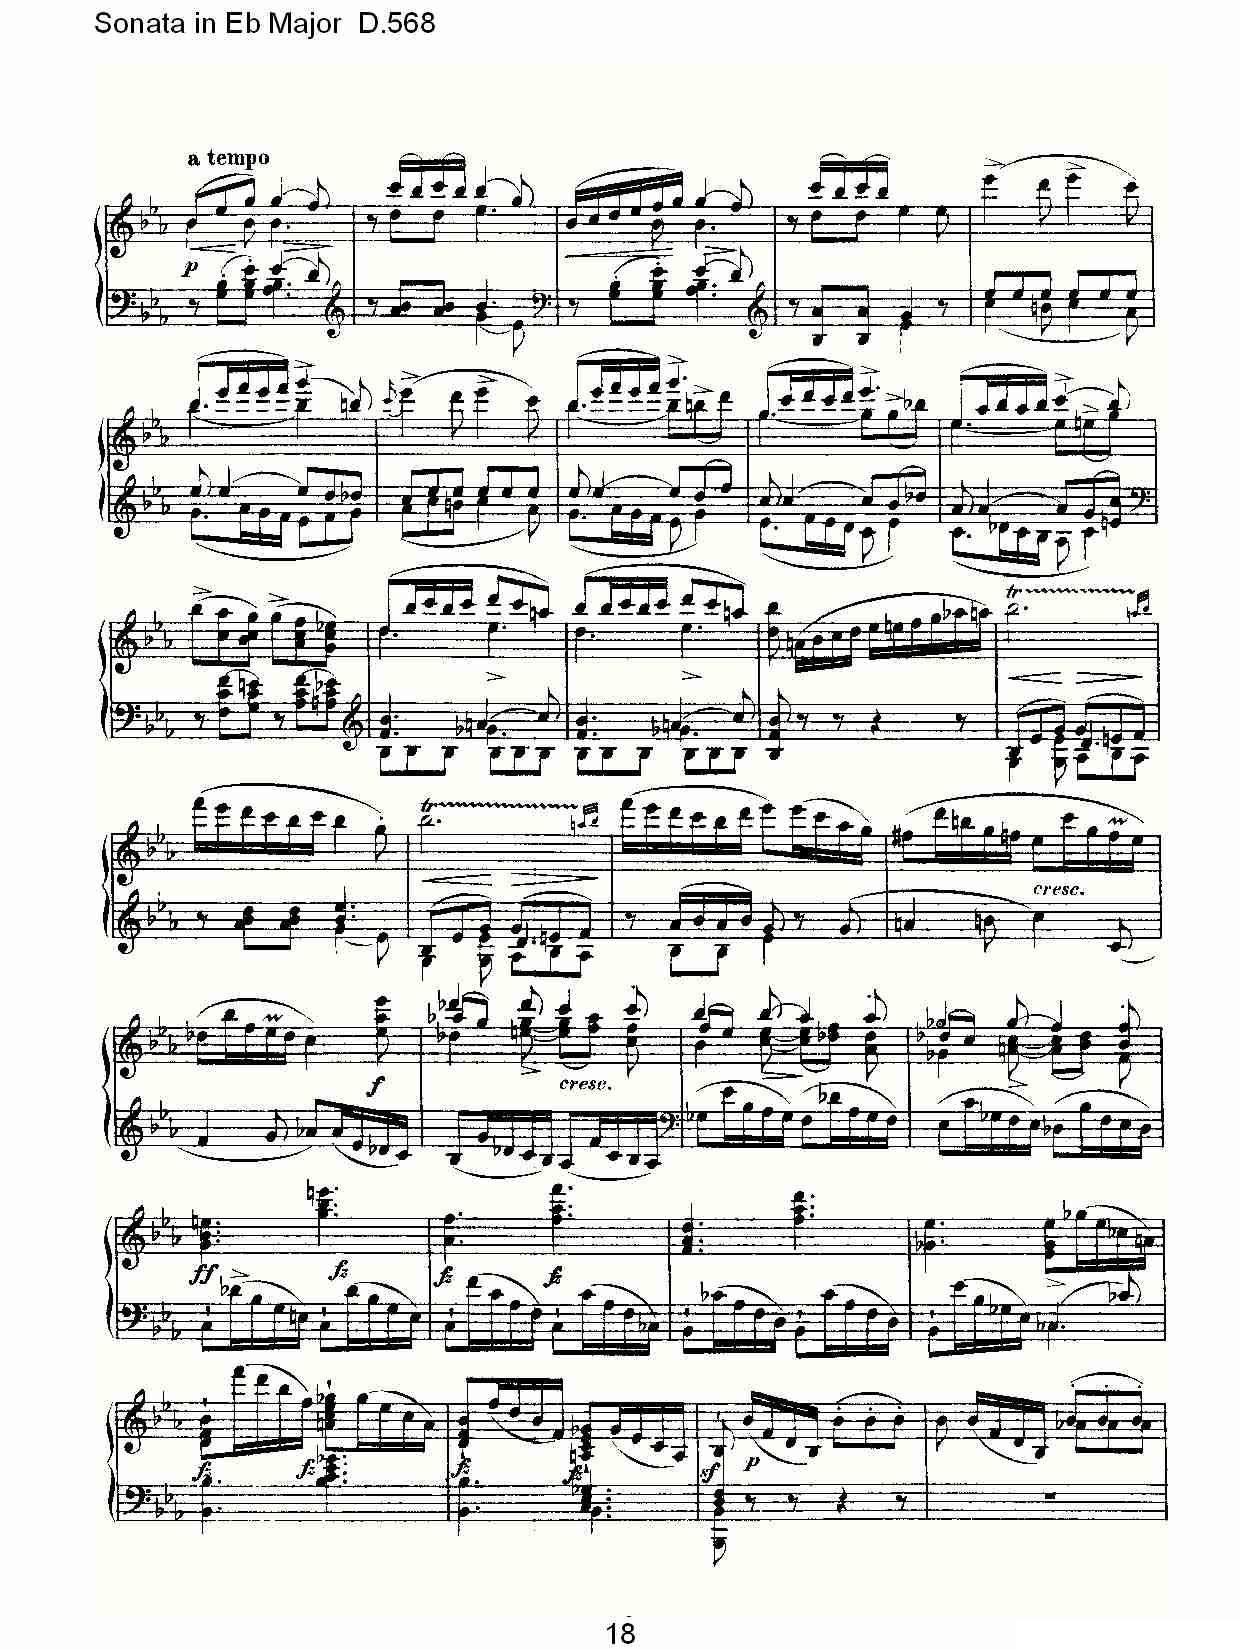 Sonata in Eb Major D.568（Eb大调奏鸣曲 D.568）钢琴曲谱（图18）